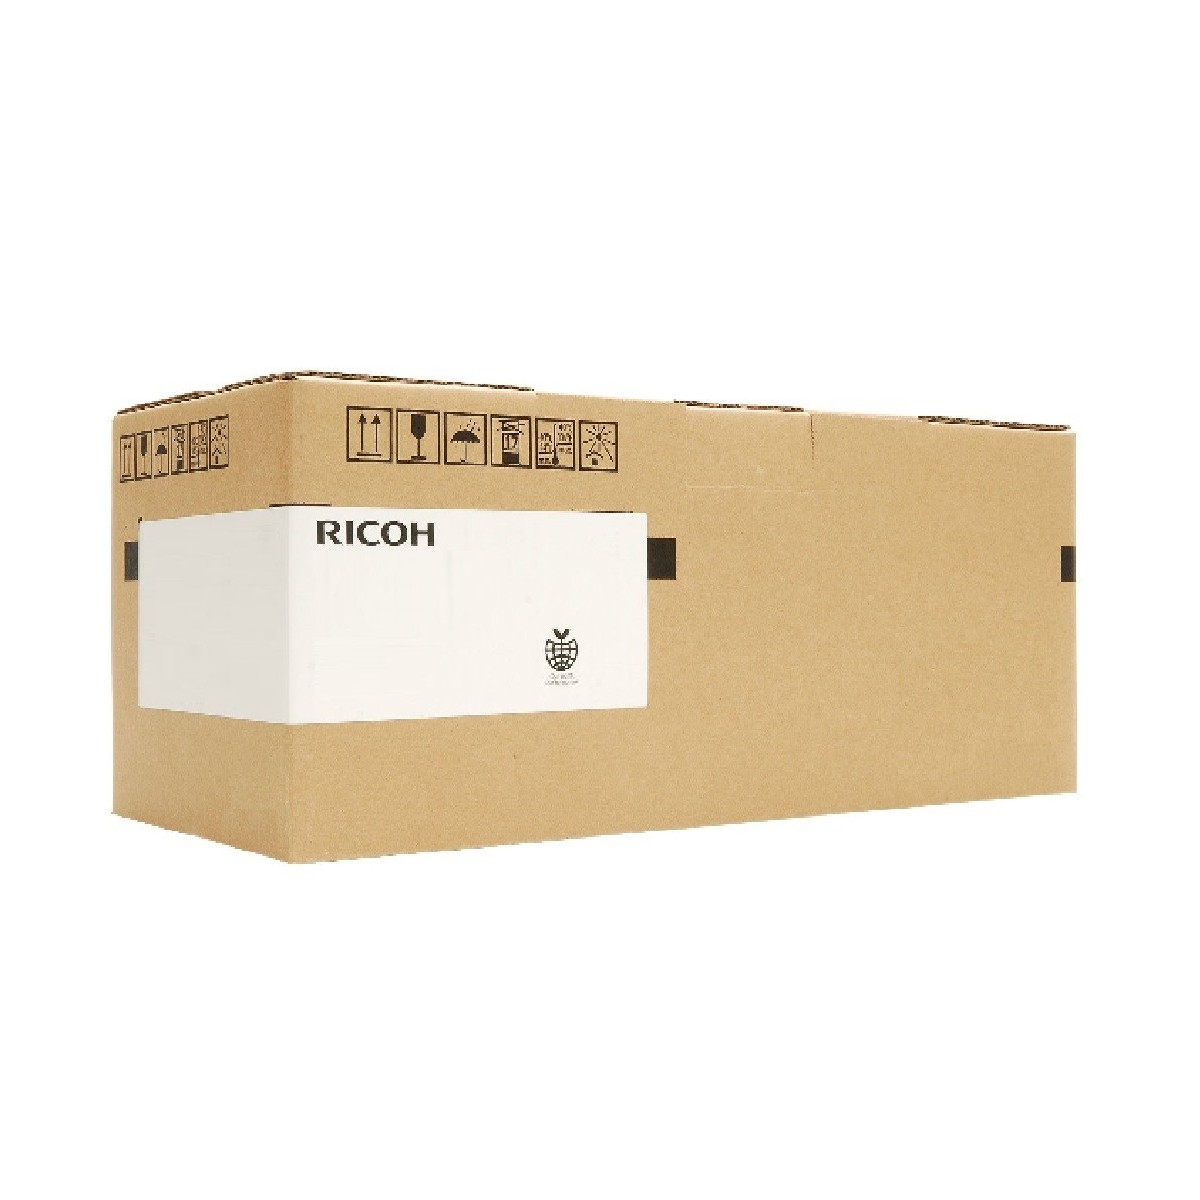 Ricoh D1170125 - Original - Ricoh - Aficio MP C305 Aficio MP C305SP Aficio MP C305SPF - 1 pc(s) - 60000 pages - Black